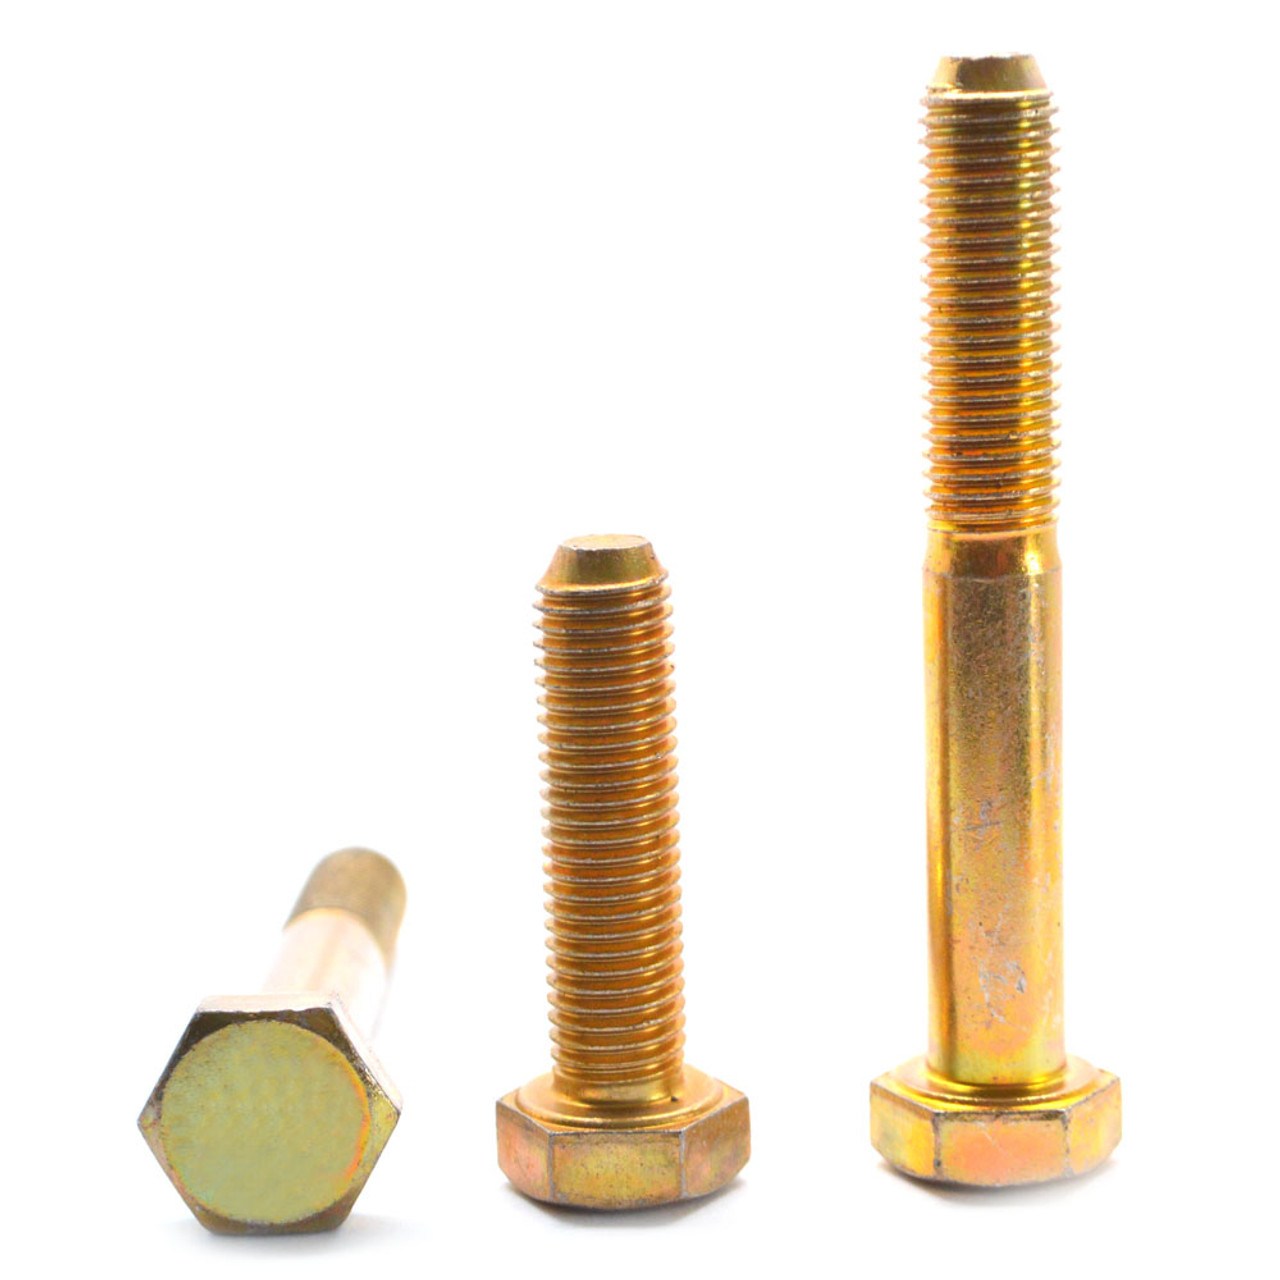 M20 x 2.50 x 220 MM Coarse Thread DIN 931 / ISO 4014 Class 10.9 Hex Cap Screw (Bolt) Alloy Steel Yellow Zinc Plated